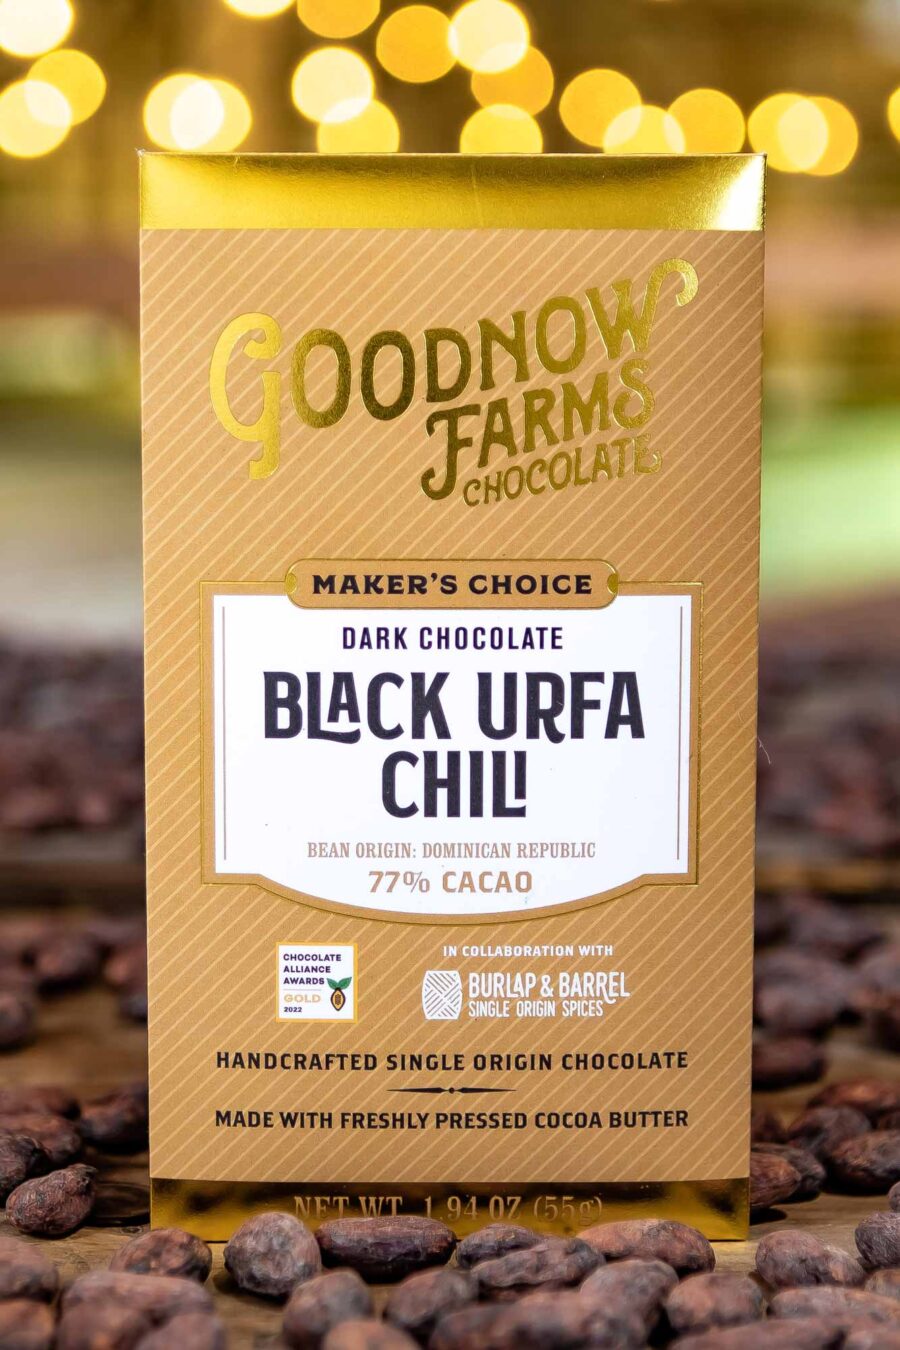 Goodnow Farms Maker's Choice Dominican Republic 77% Dark Chocolate Bar with Black Urfa Chili